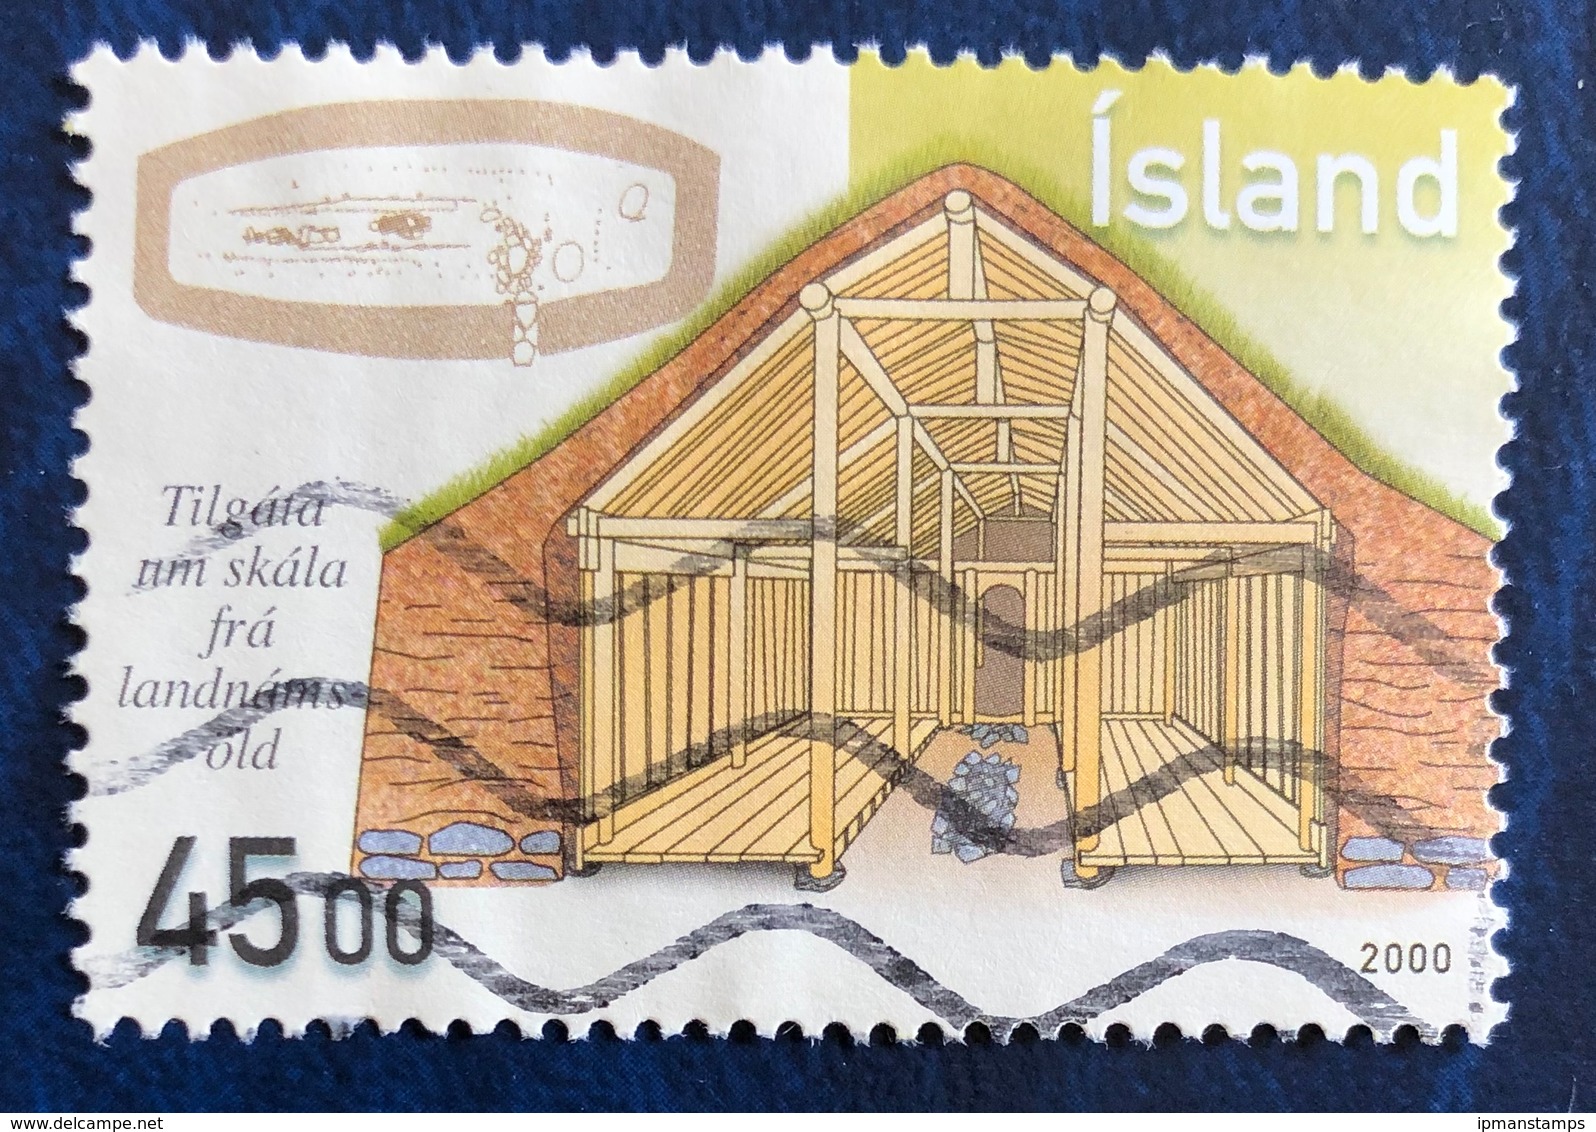 Architettura: Abitazioni Islandesi Di Epoca Vichinga - Architecture: Houses Of The Viking Era - Used Stamps